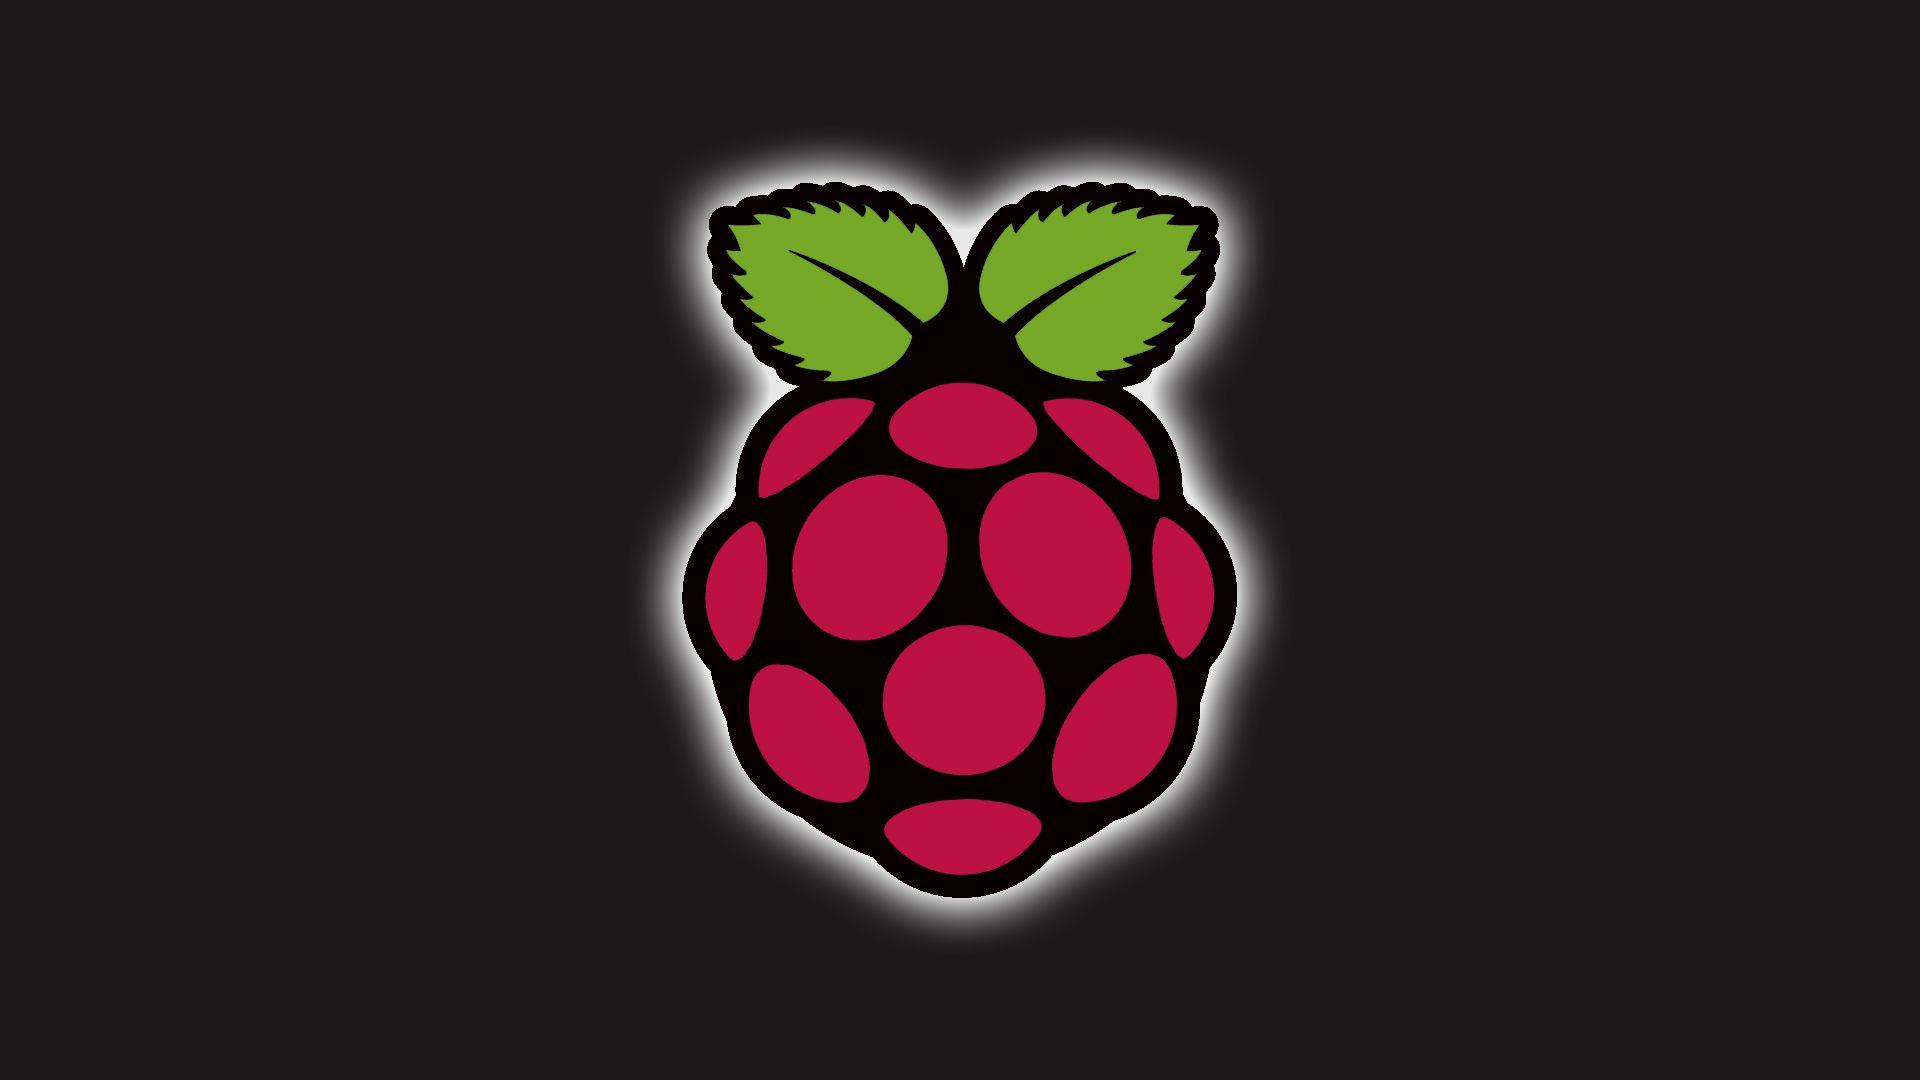 Raspberry Pi Wallpaper Free Raspberry Pi Background